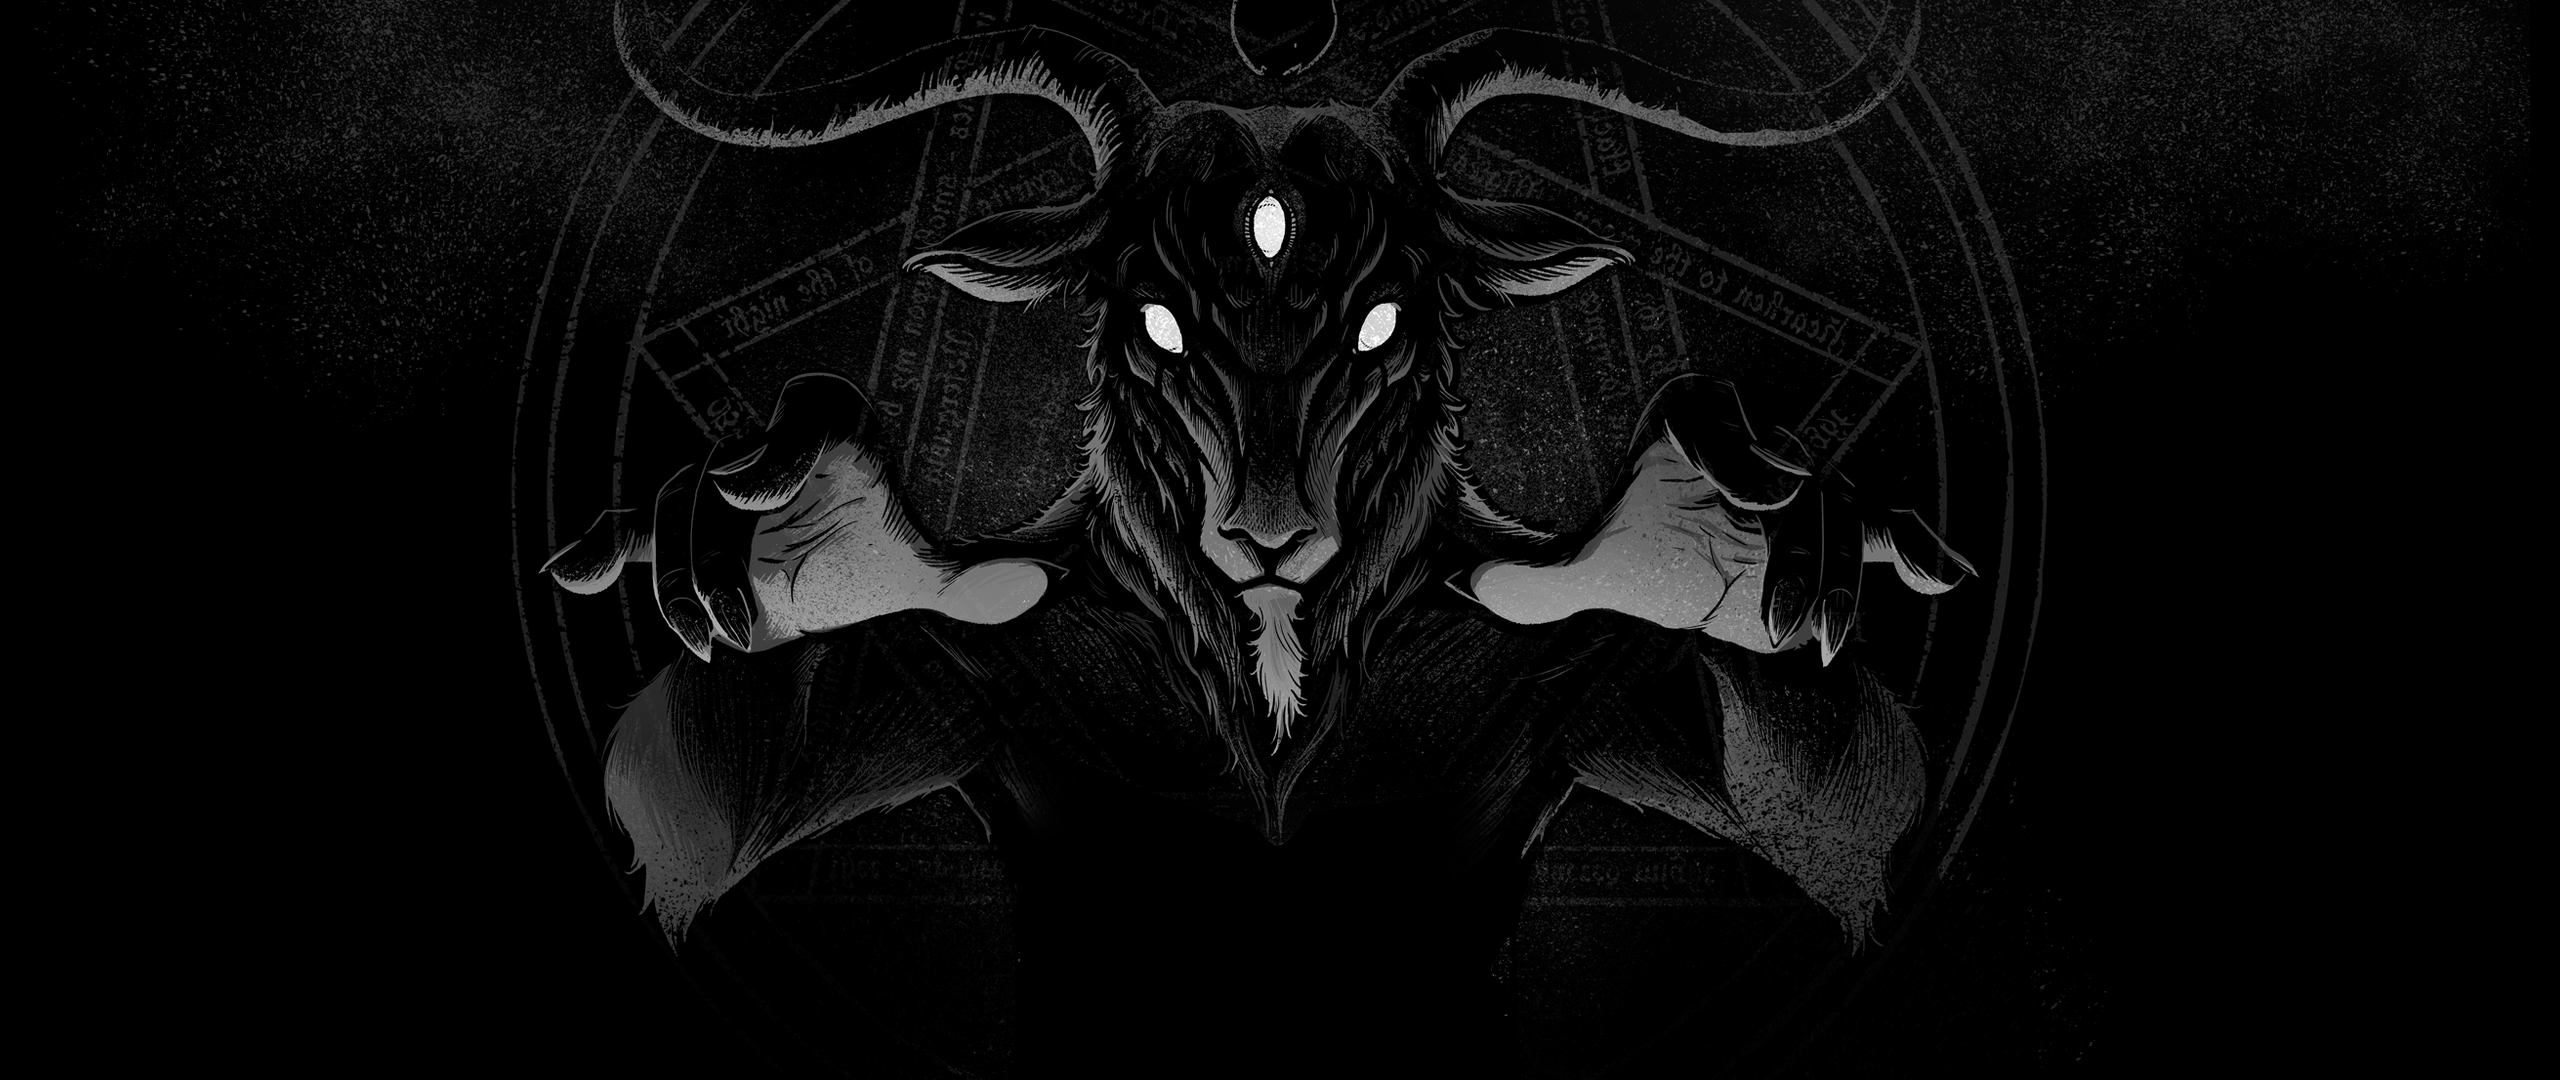 General 2560x1080 black metal dark dark background monochrome satanic Anthro creature Baphomet Beelzebub